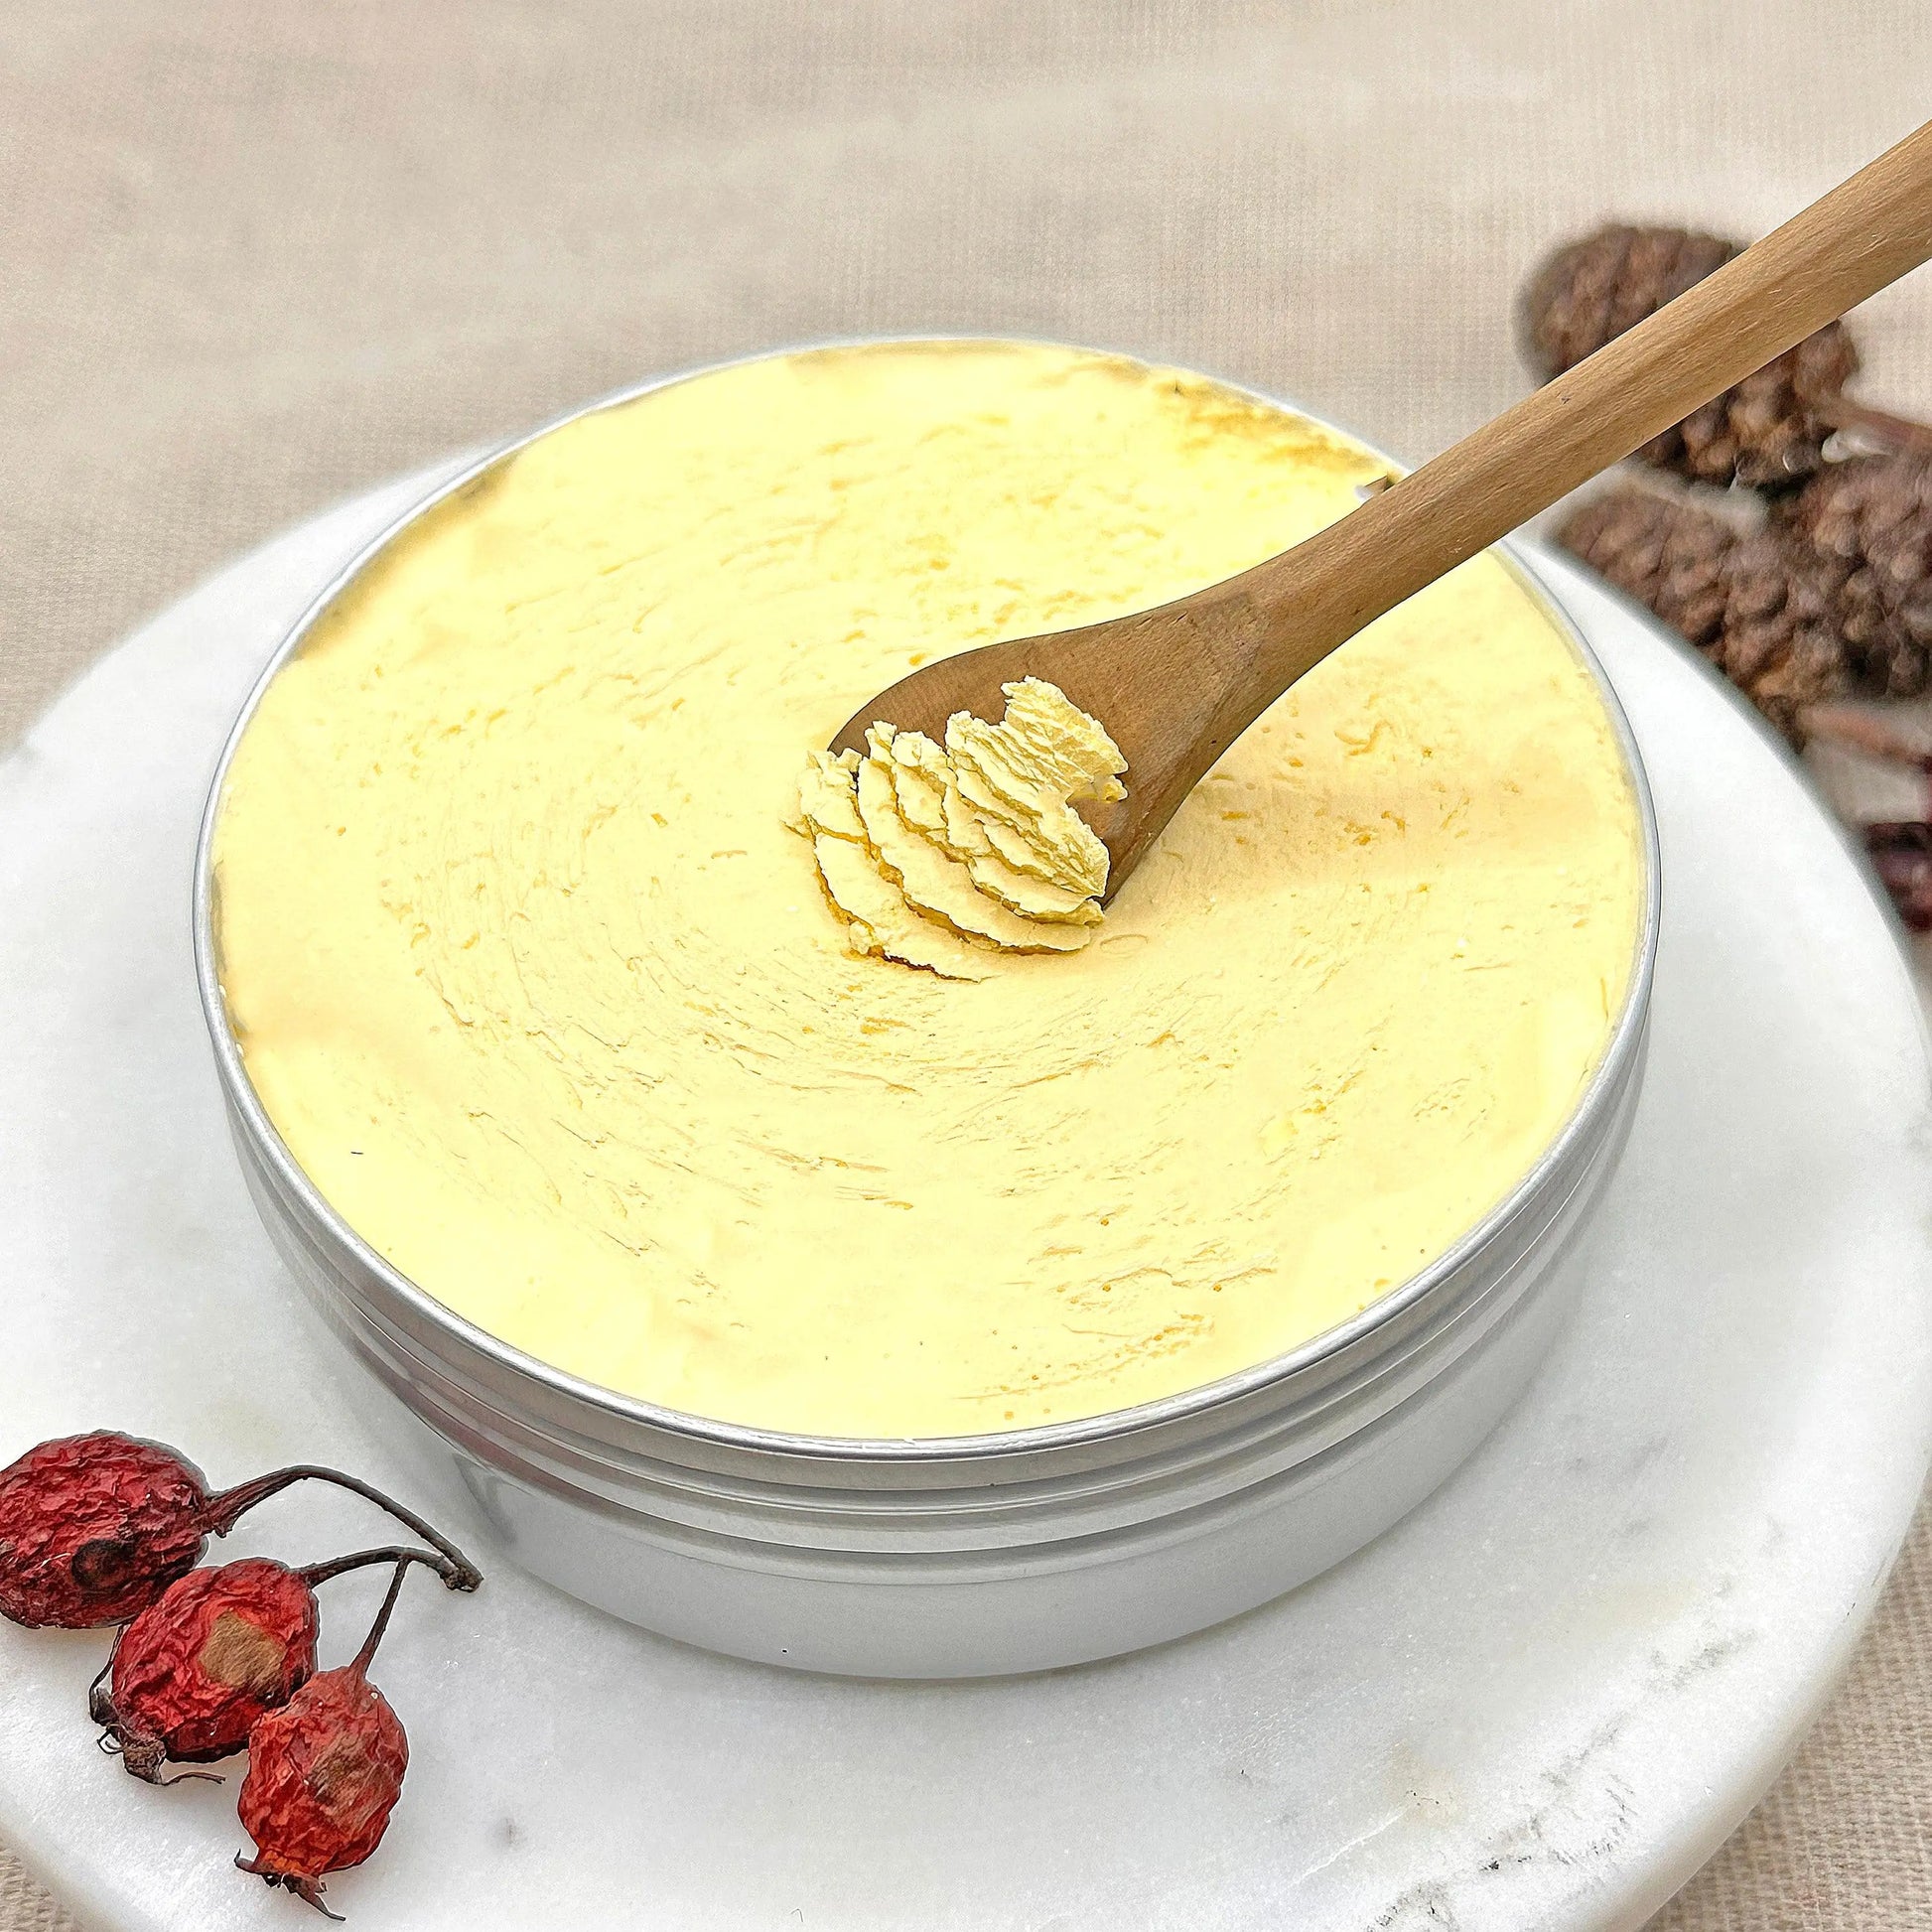 Horizon - Anti-aging skin butter - Vegan Friendly Recipe